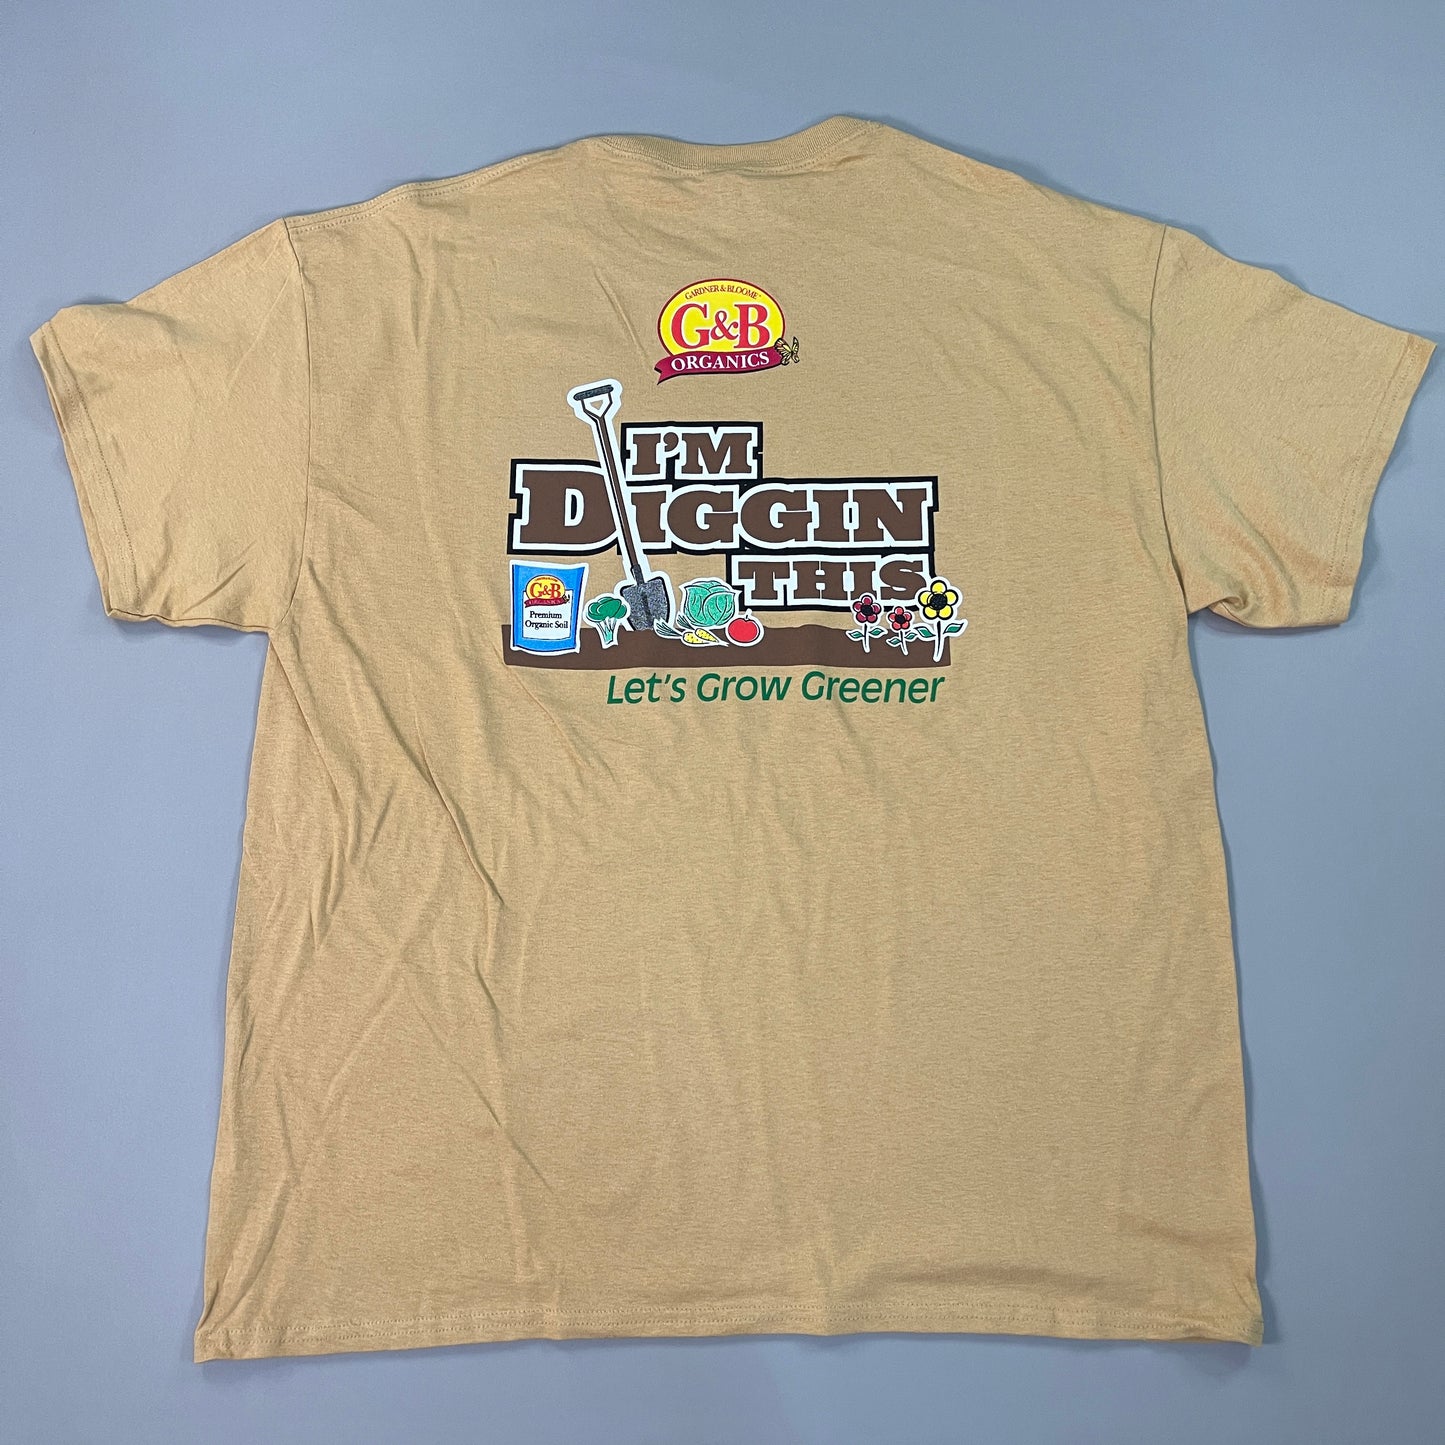 G&B Organics "I'm Diggin This" Logo T-shirt Unisex Sz XL Mustard (New)